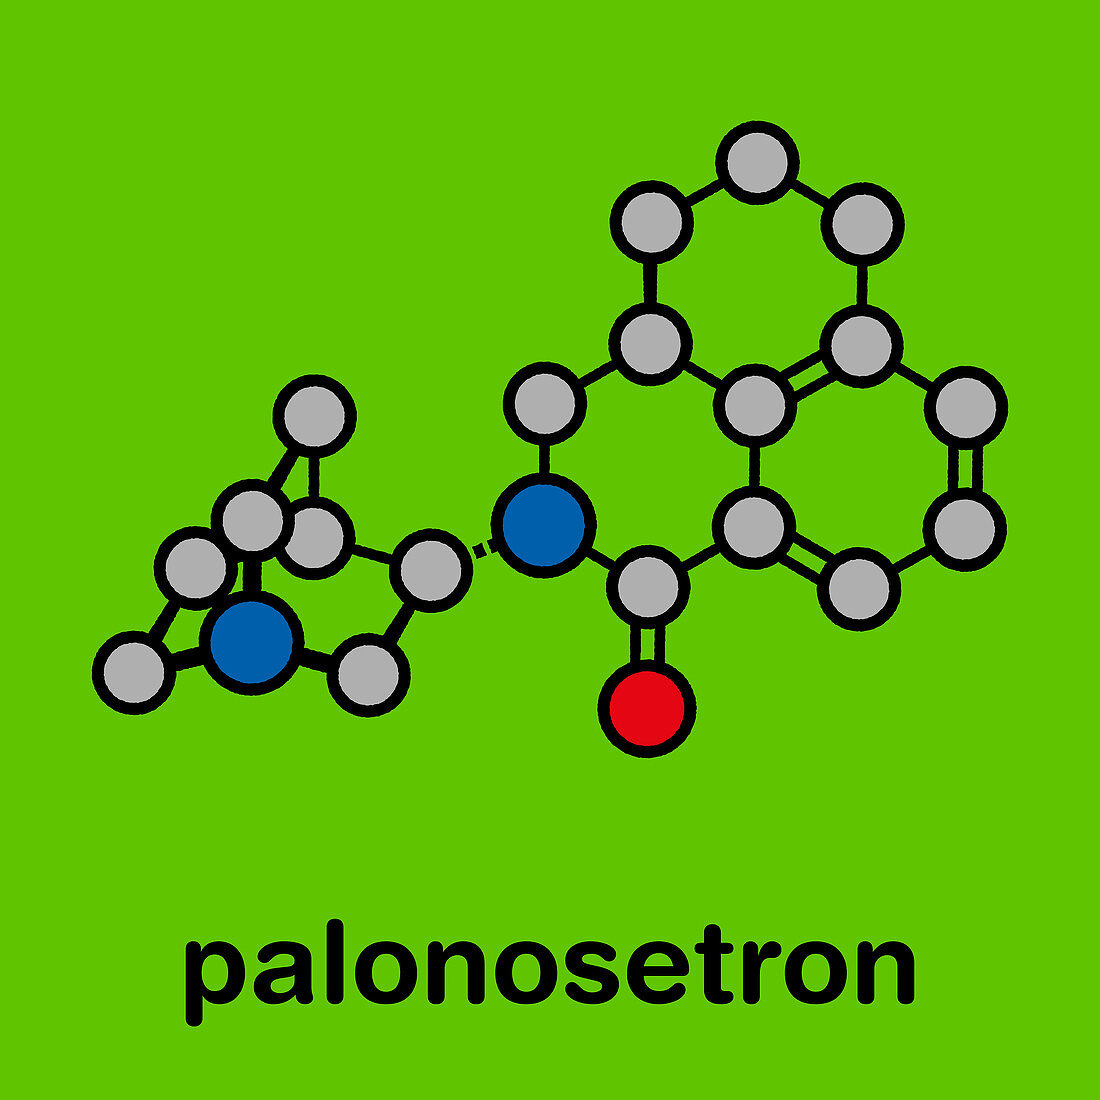 Palonosetron nausea and vomiting drug molecule, illustration